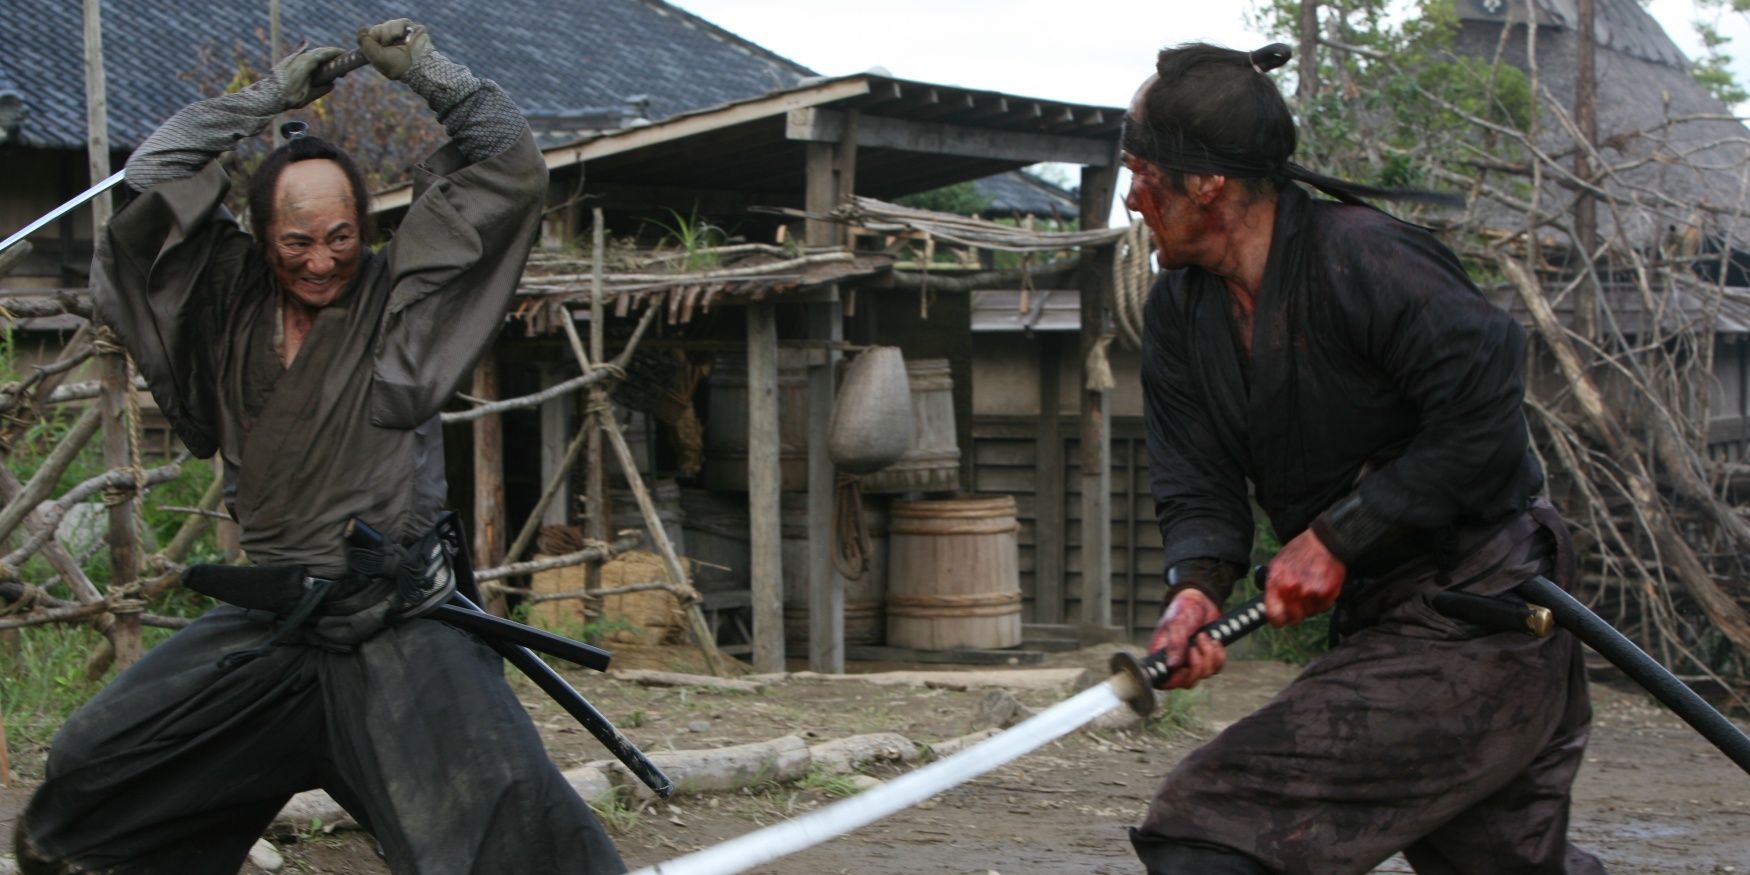 Japanese Gore Takashi Miikes 5 Best & 5 Worst Films According to Rotten Tomatoes